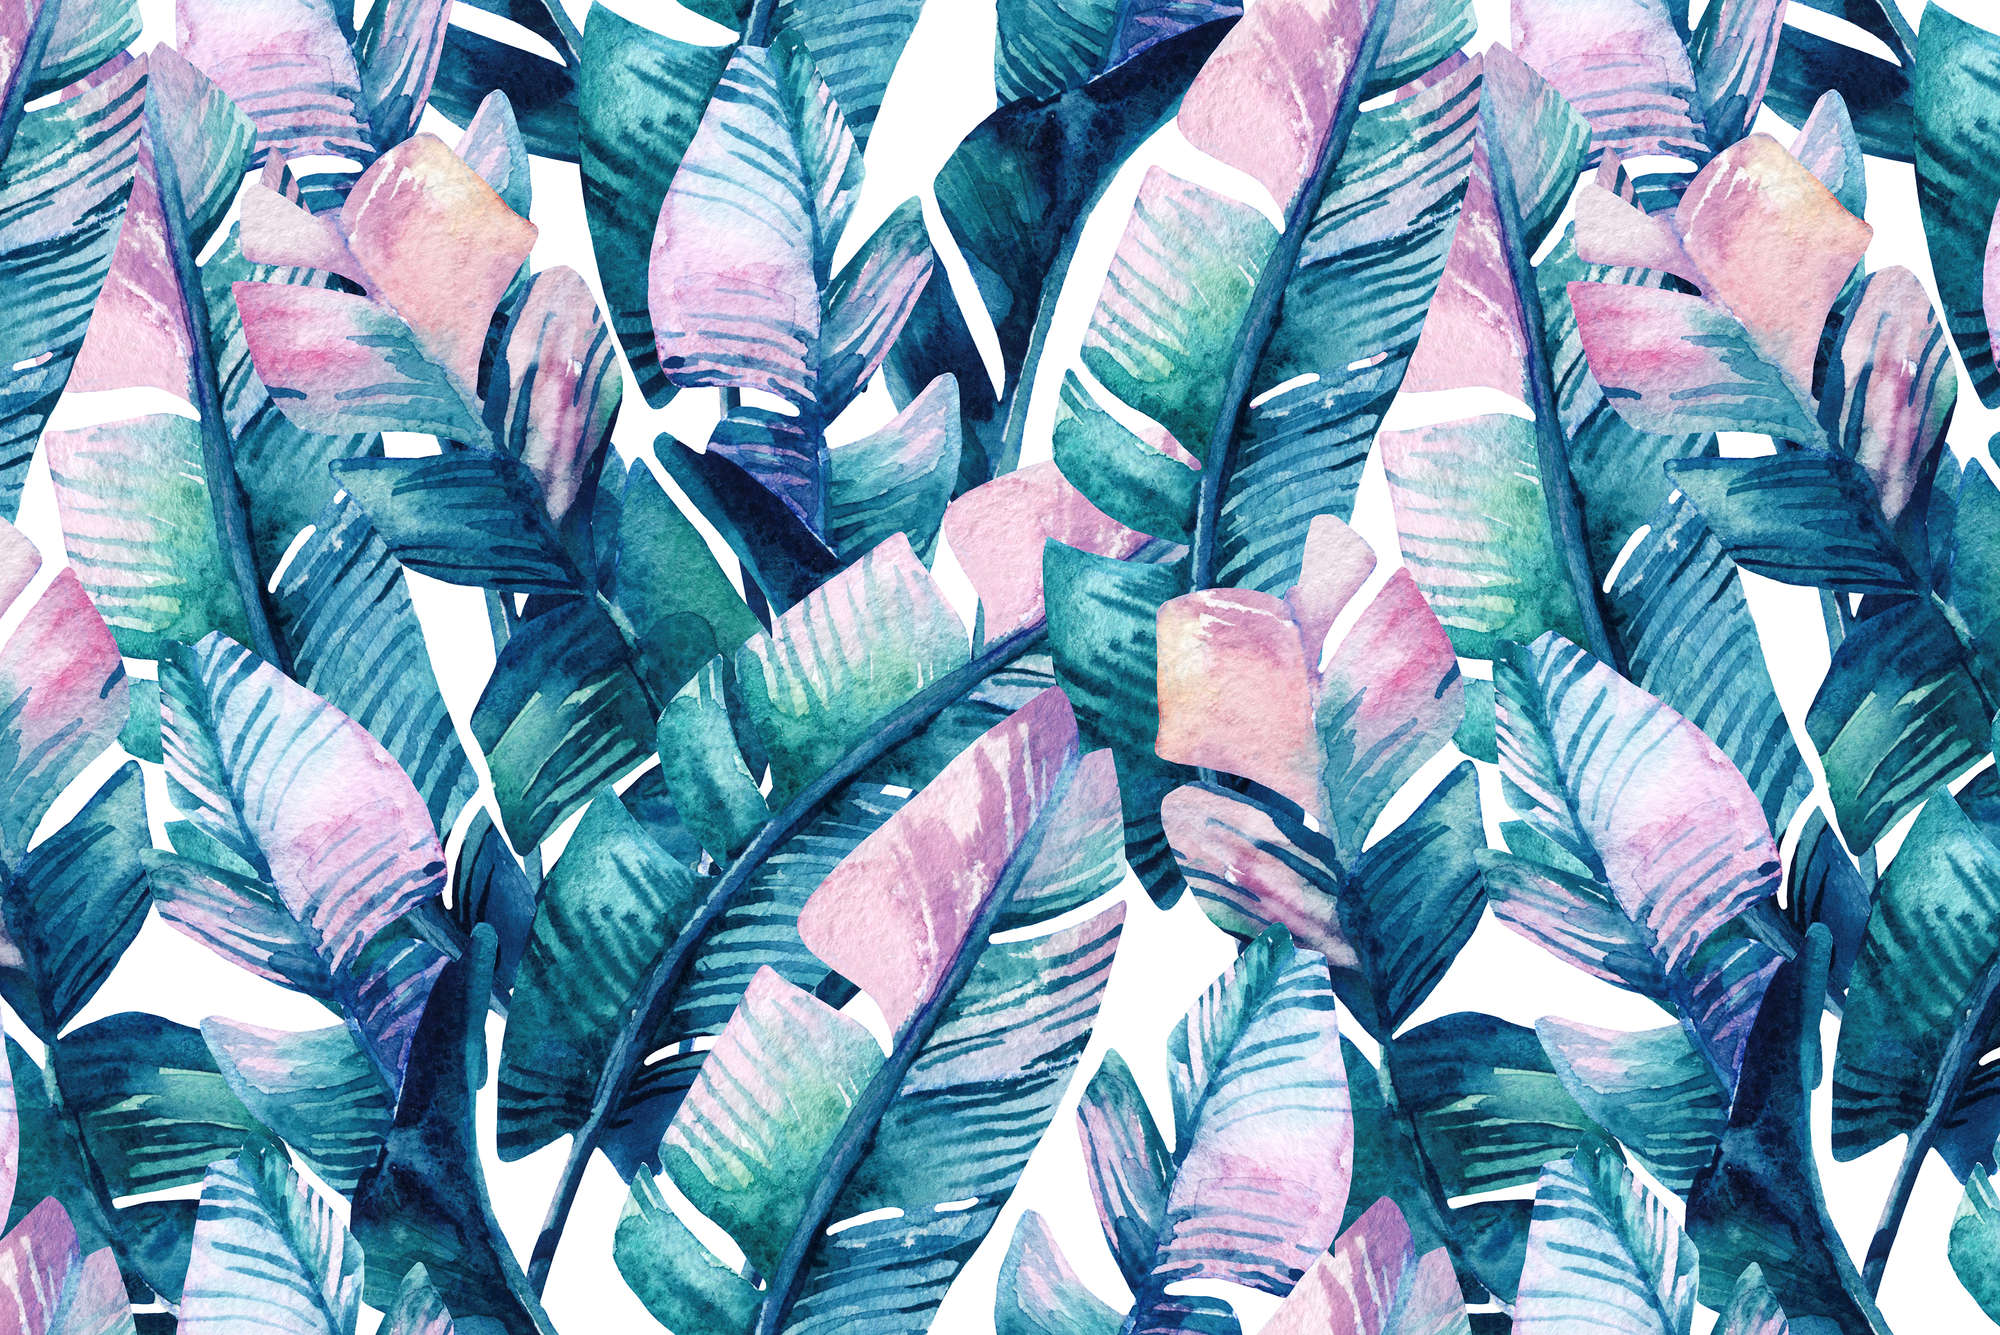             Grafisch behang jungle planten roze turquoise op premium gladde fleece
        